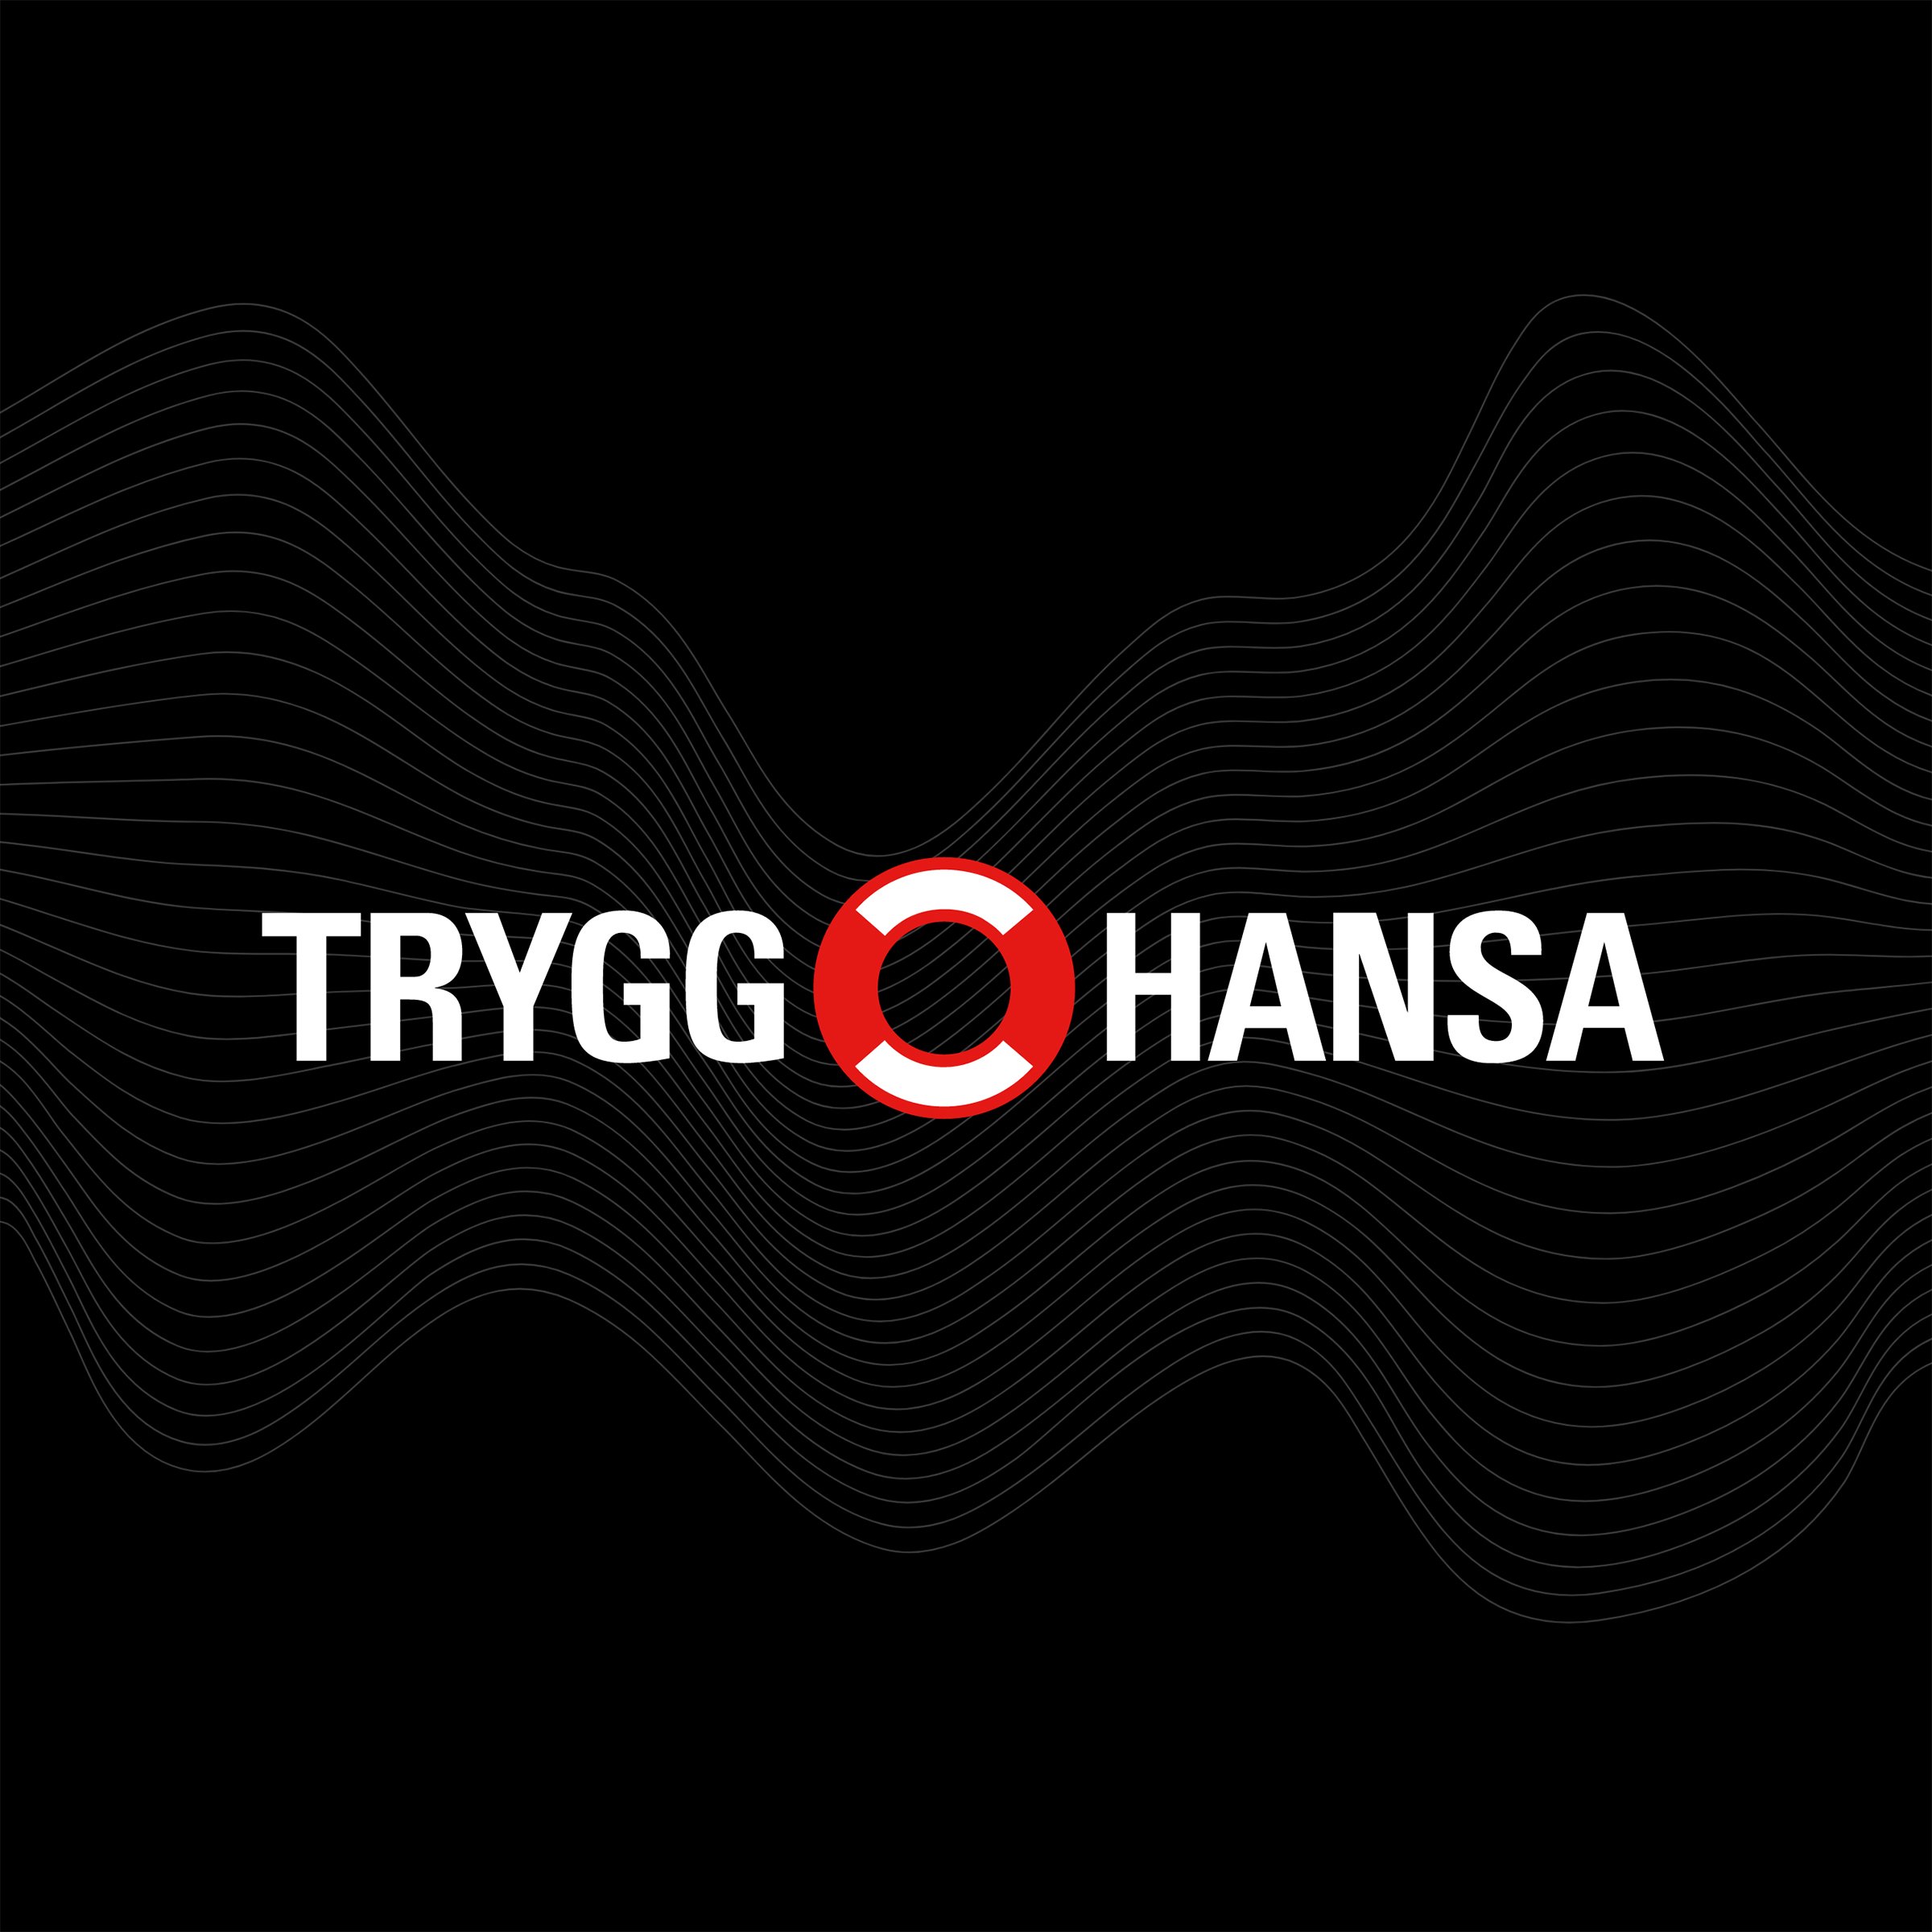 Trygghansa logo